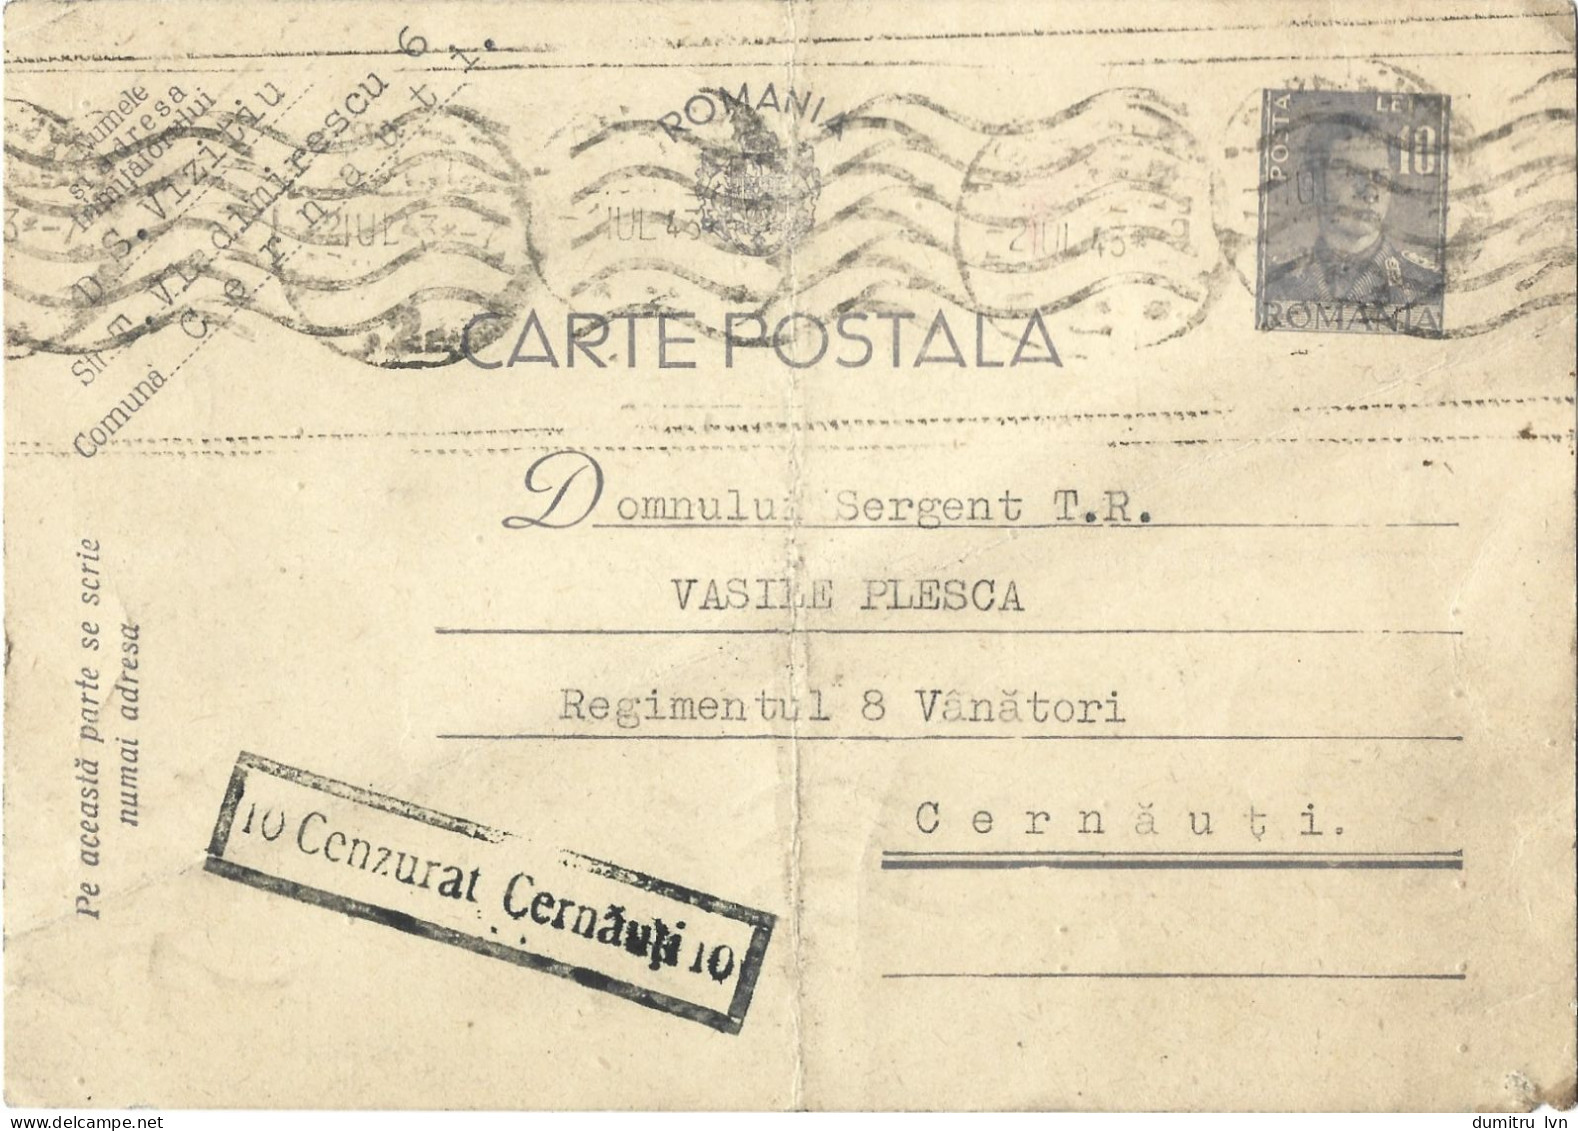 ROMANIA 1943 POSTCARD, CENSORED CERNAUTI 10, POSTCARD STATIONERY - World War 2 Letters